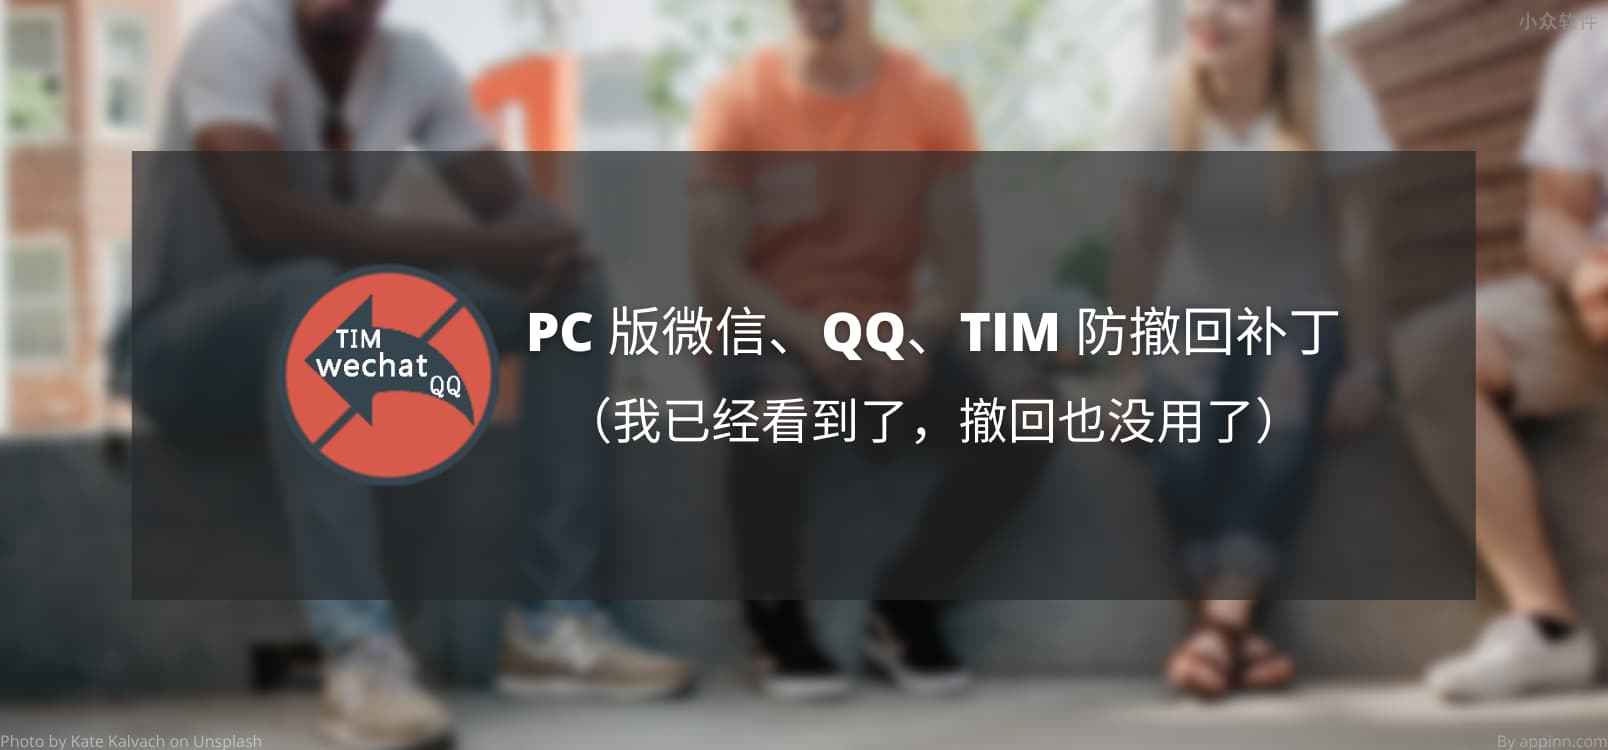 PC 版微信、QQ、TIM 防撤回补丁[Windows]